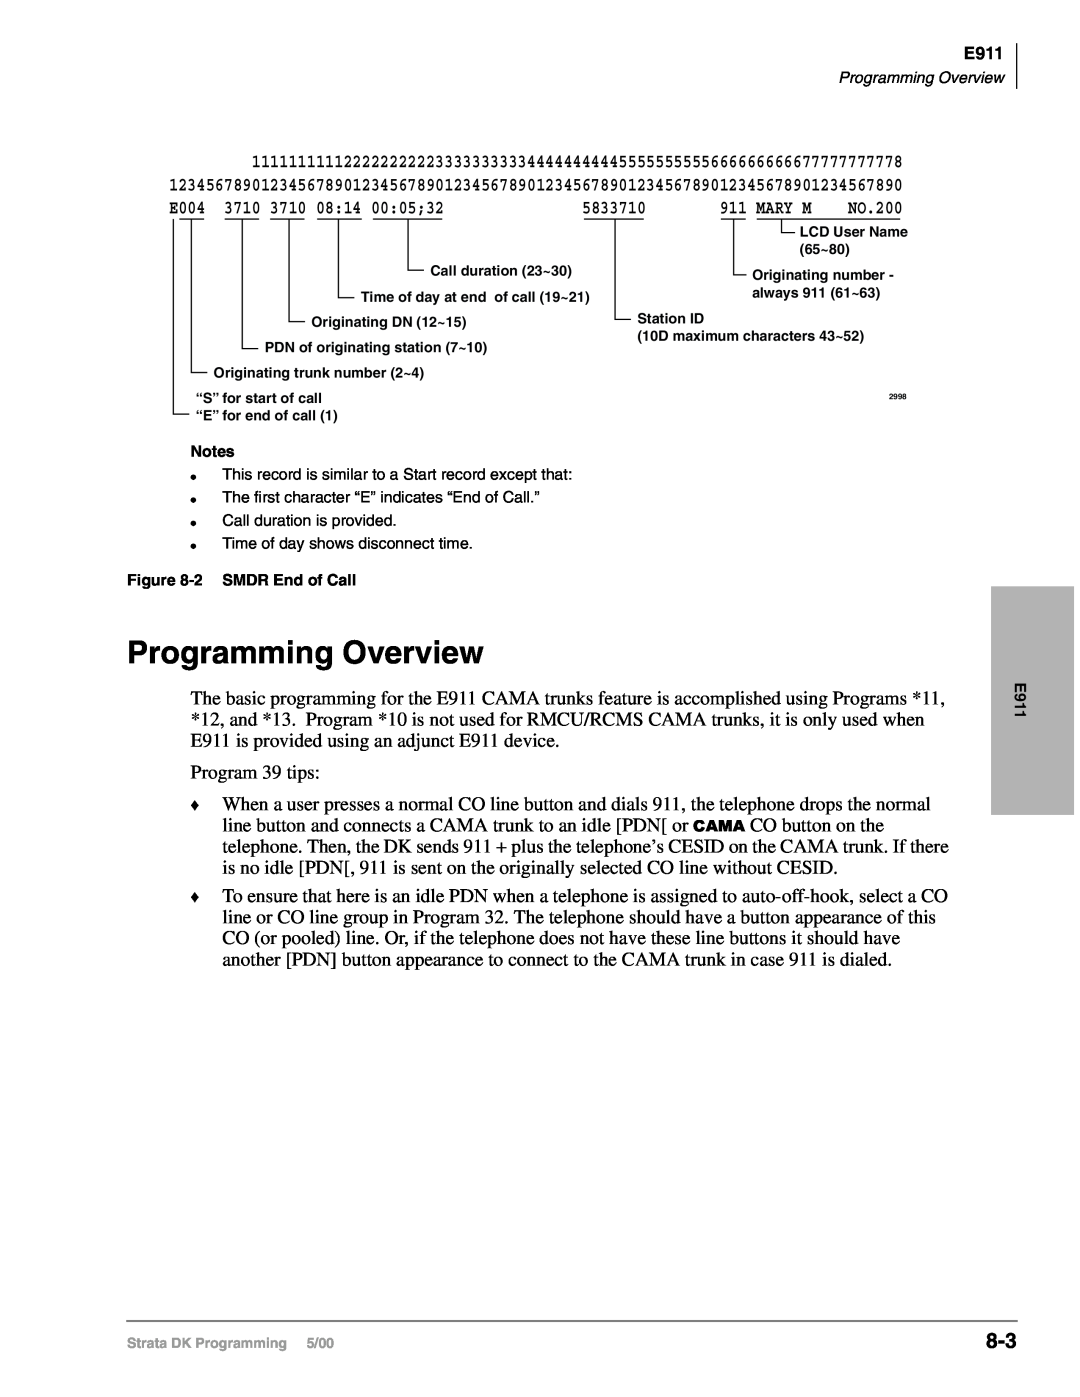 Toshiba DK424I, dk14, DK40I manual Programming Overview 